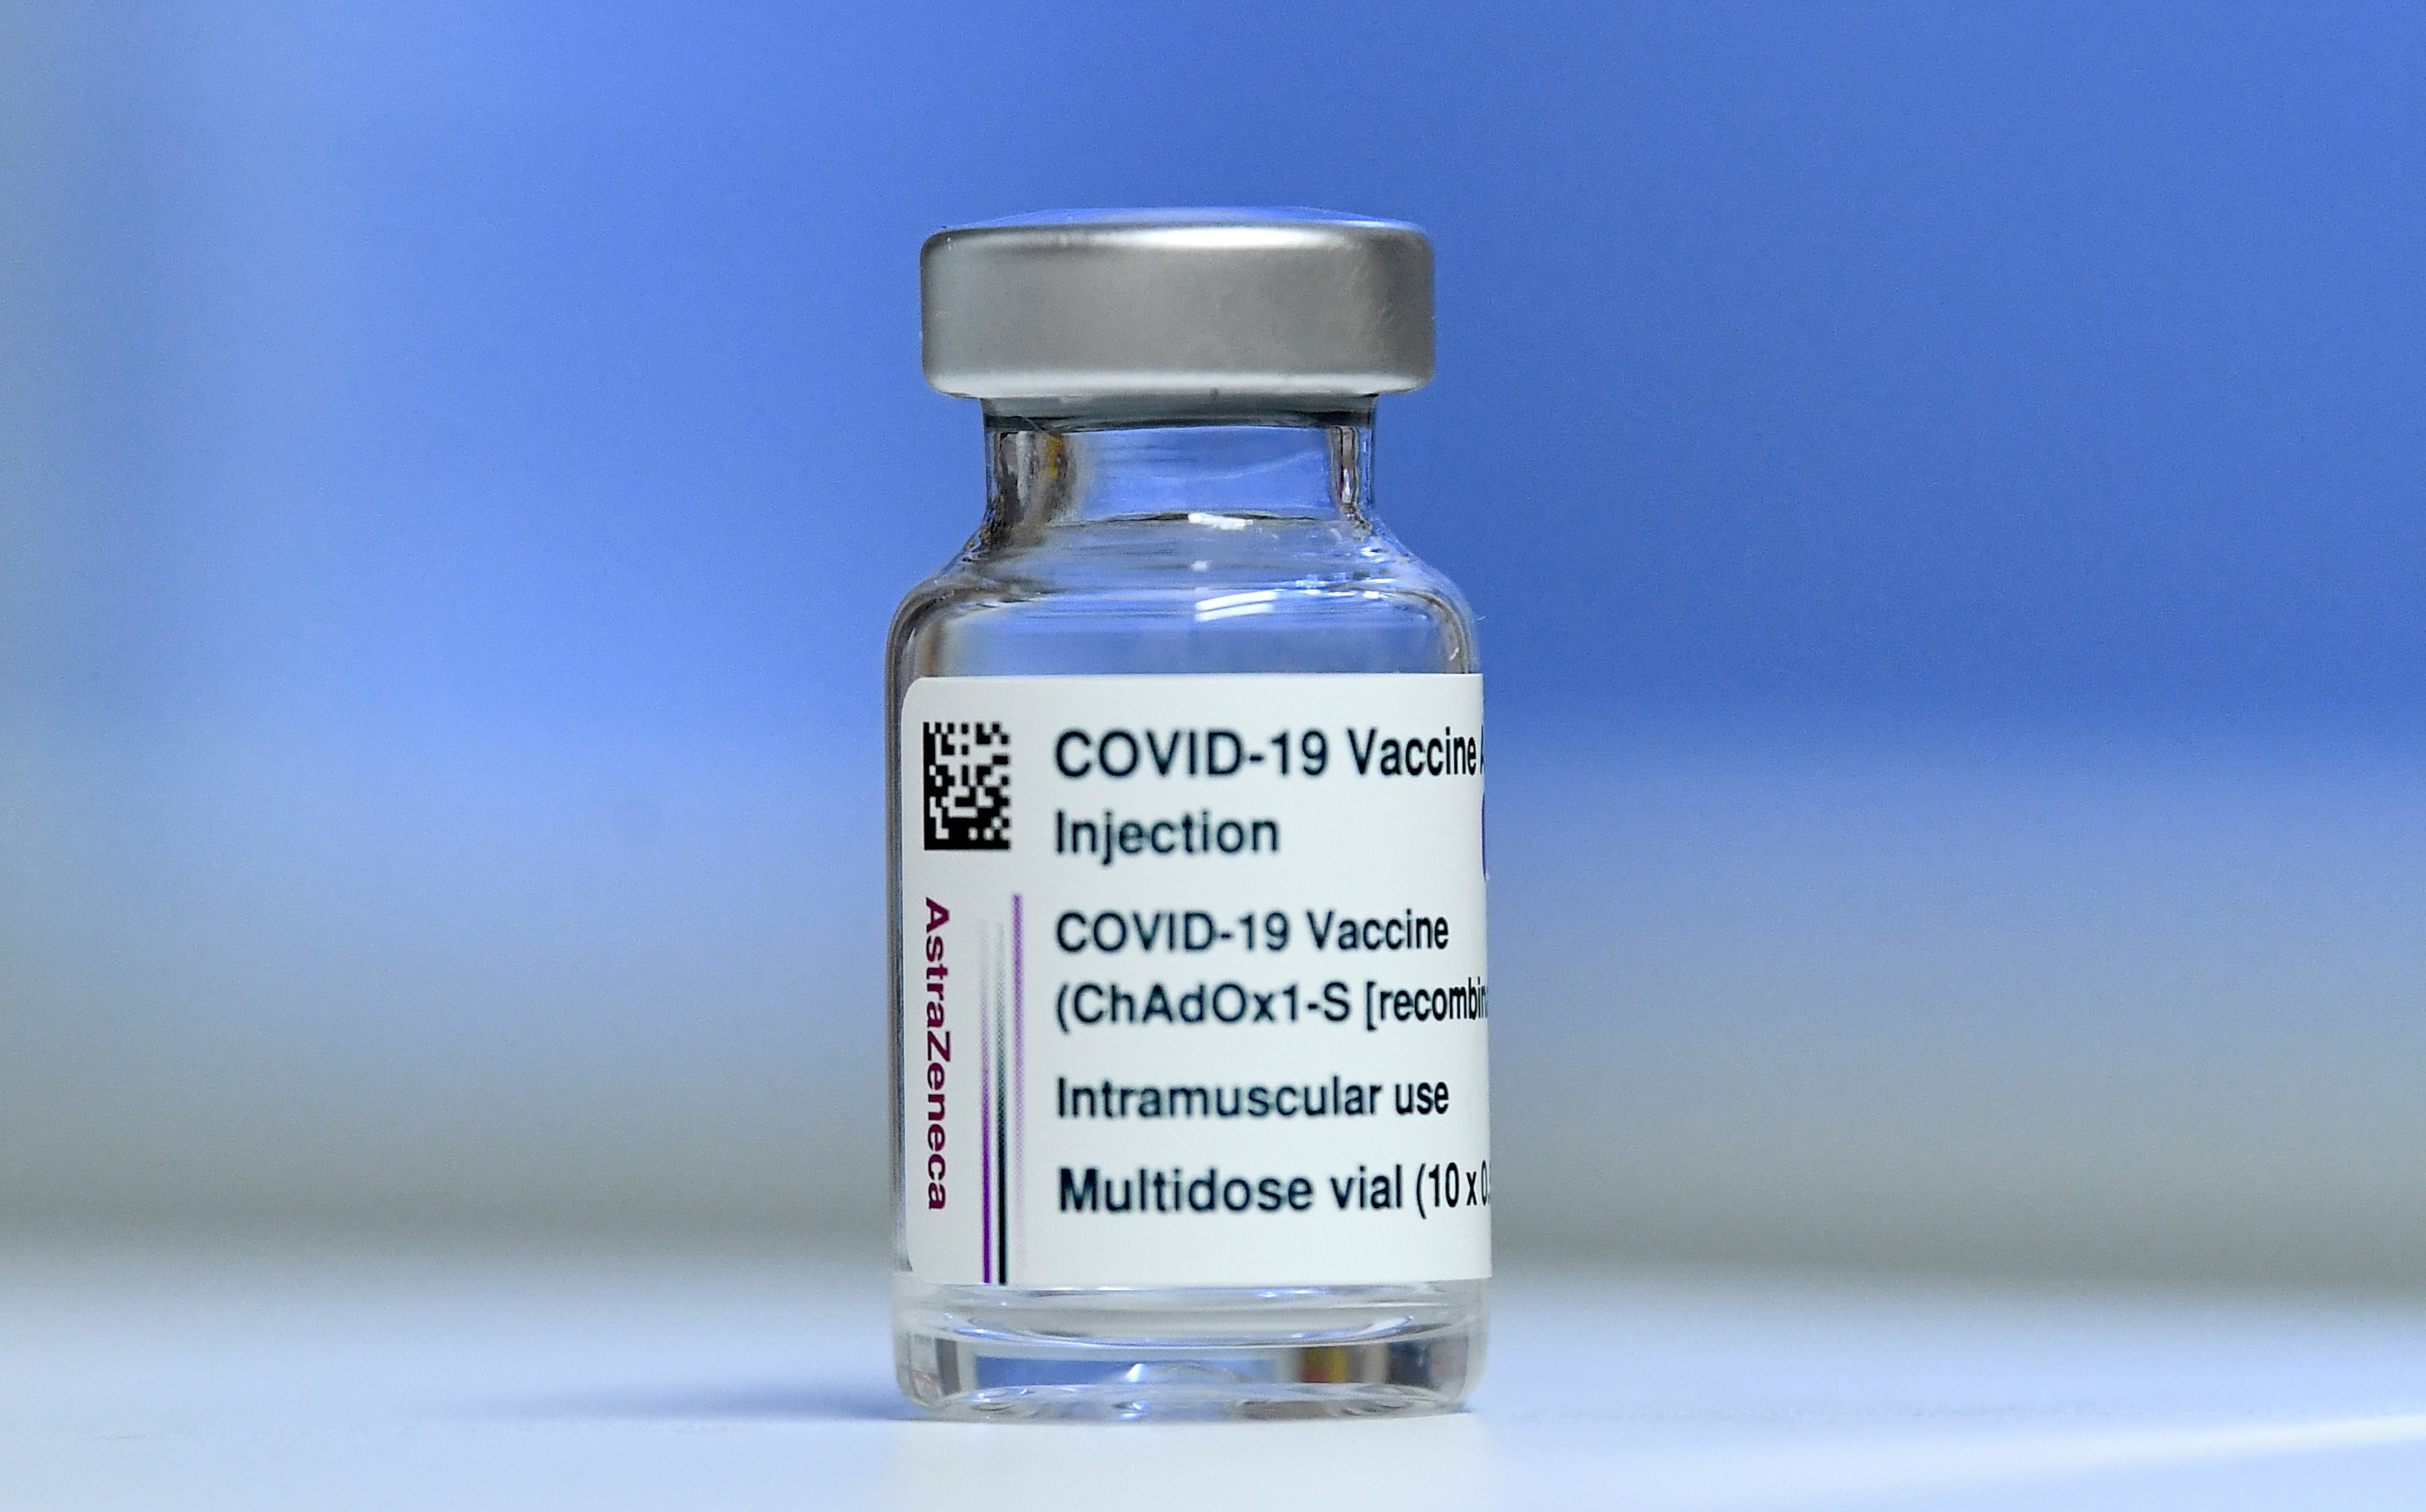 COVID-19 vaccinations in Dublin